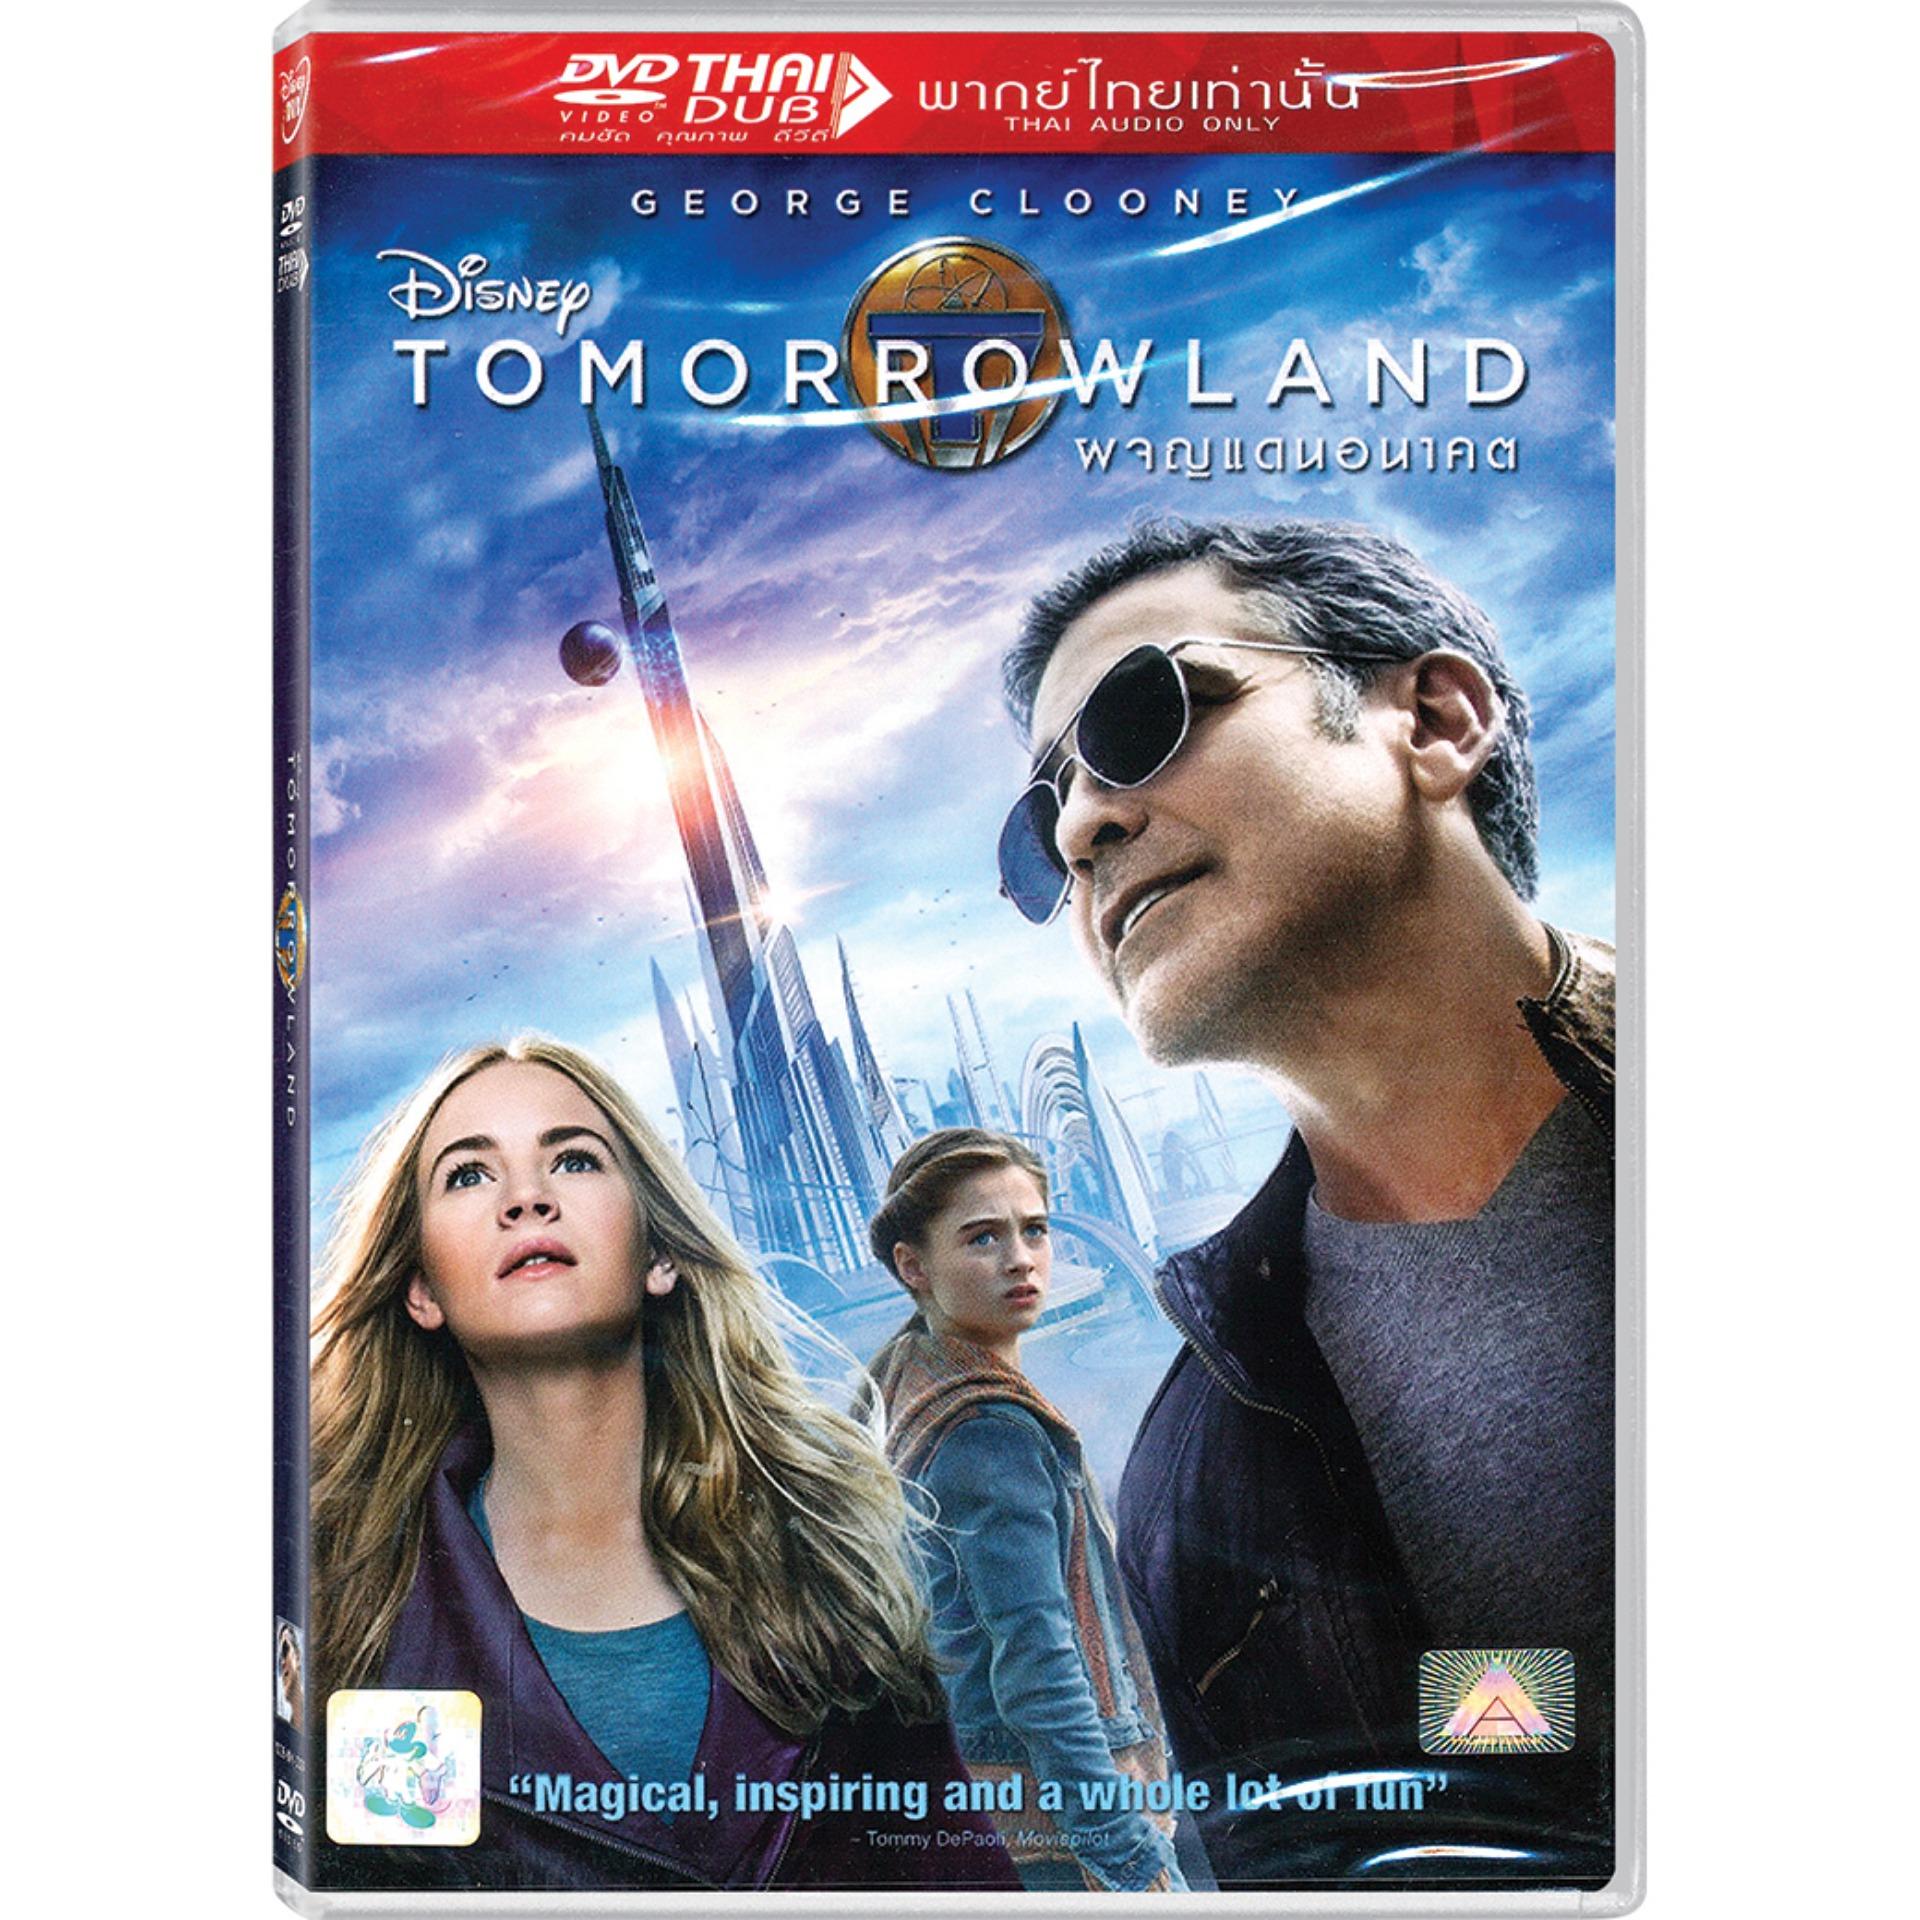 Media Play Tomorrowland ผจญแดนอนาคต (Disney) (DVD-vanilla)